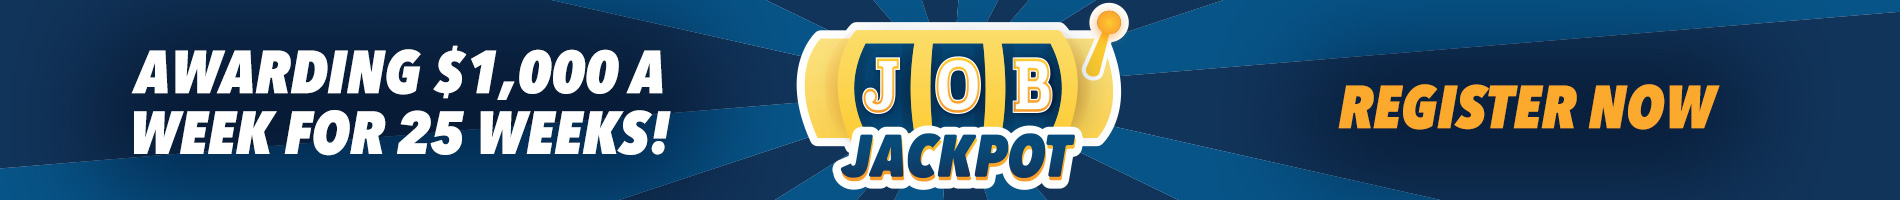 Job Jackpot Interior Banner